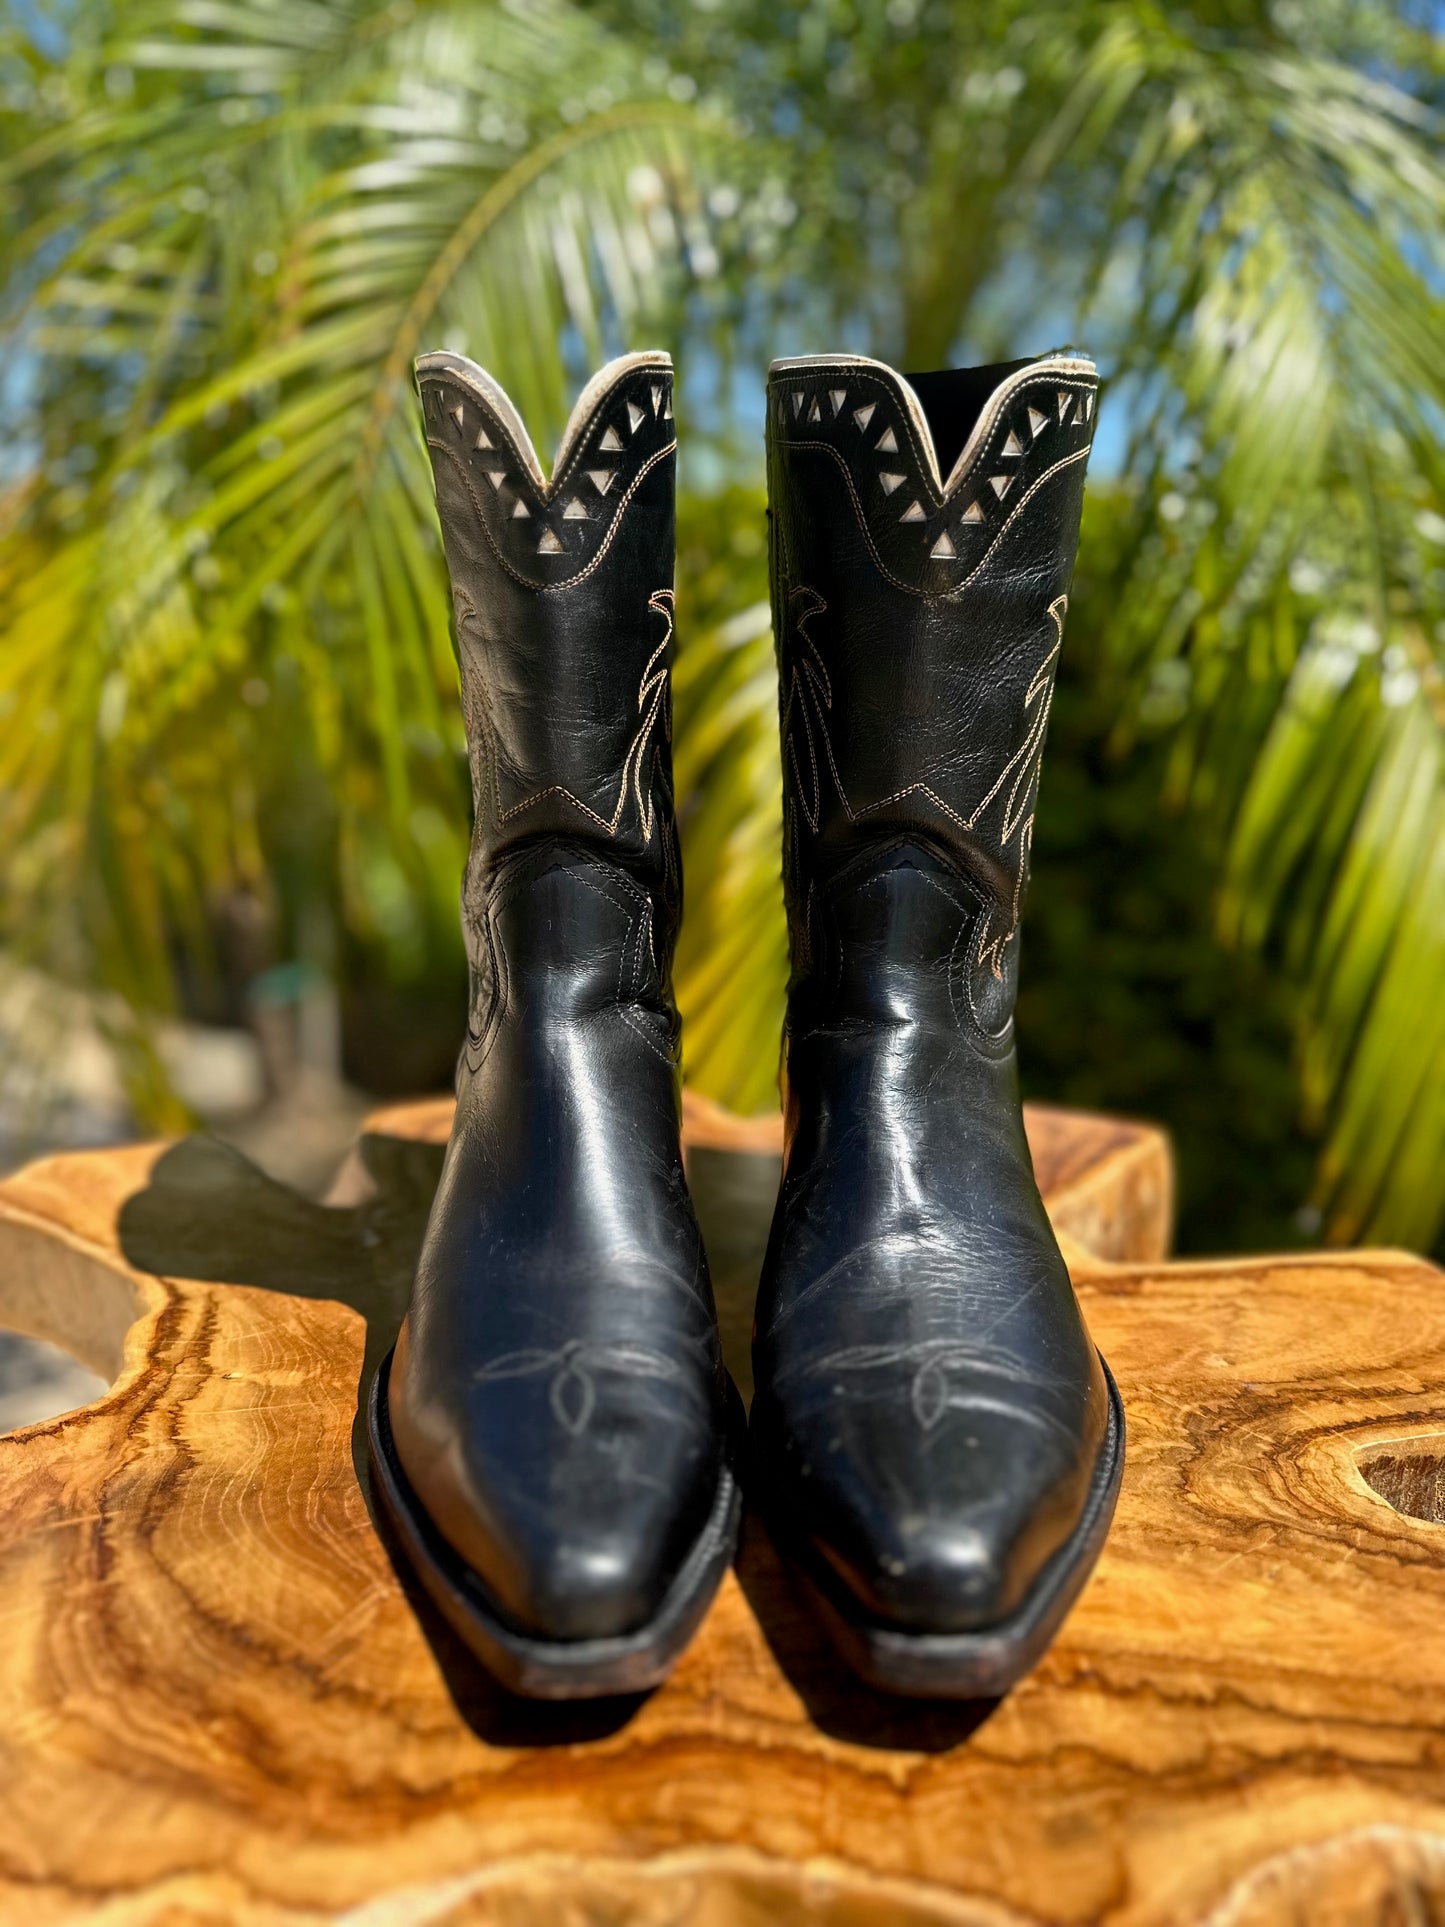 1940's FRYE Boot Company Vintage Cowboy Boots size 8.5 D